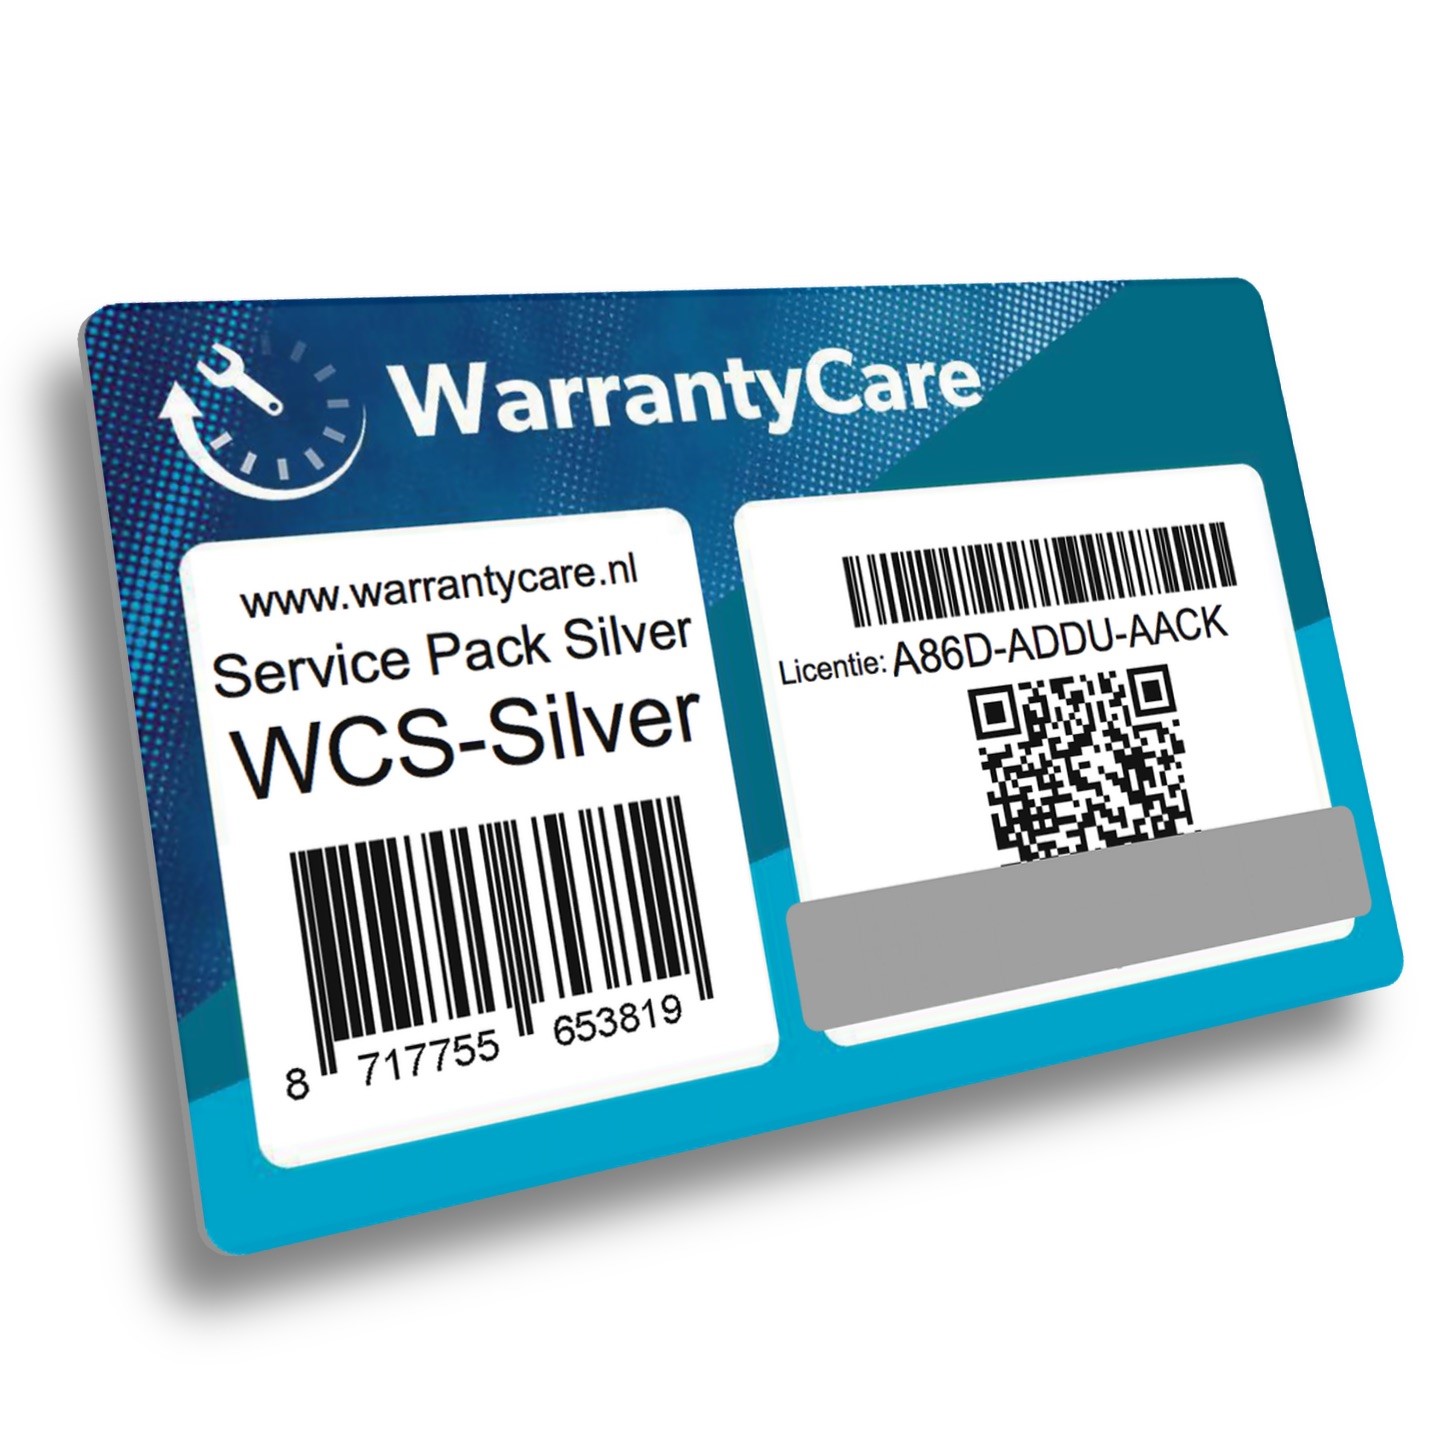 Warrantycare Service Pack I level Silver